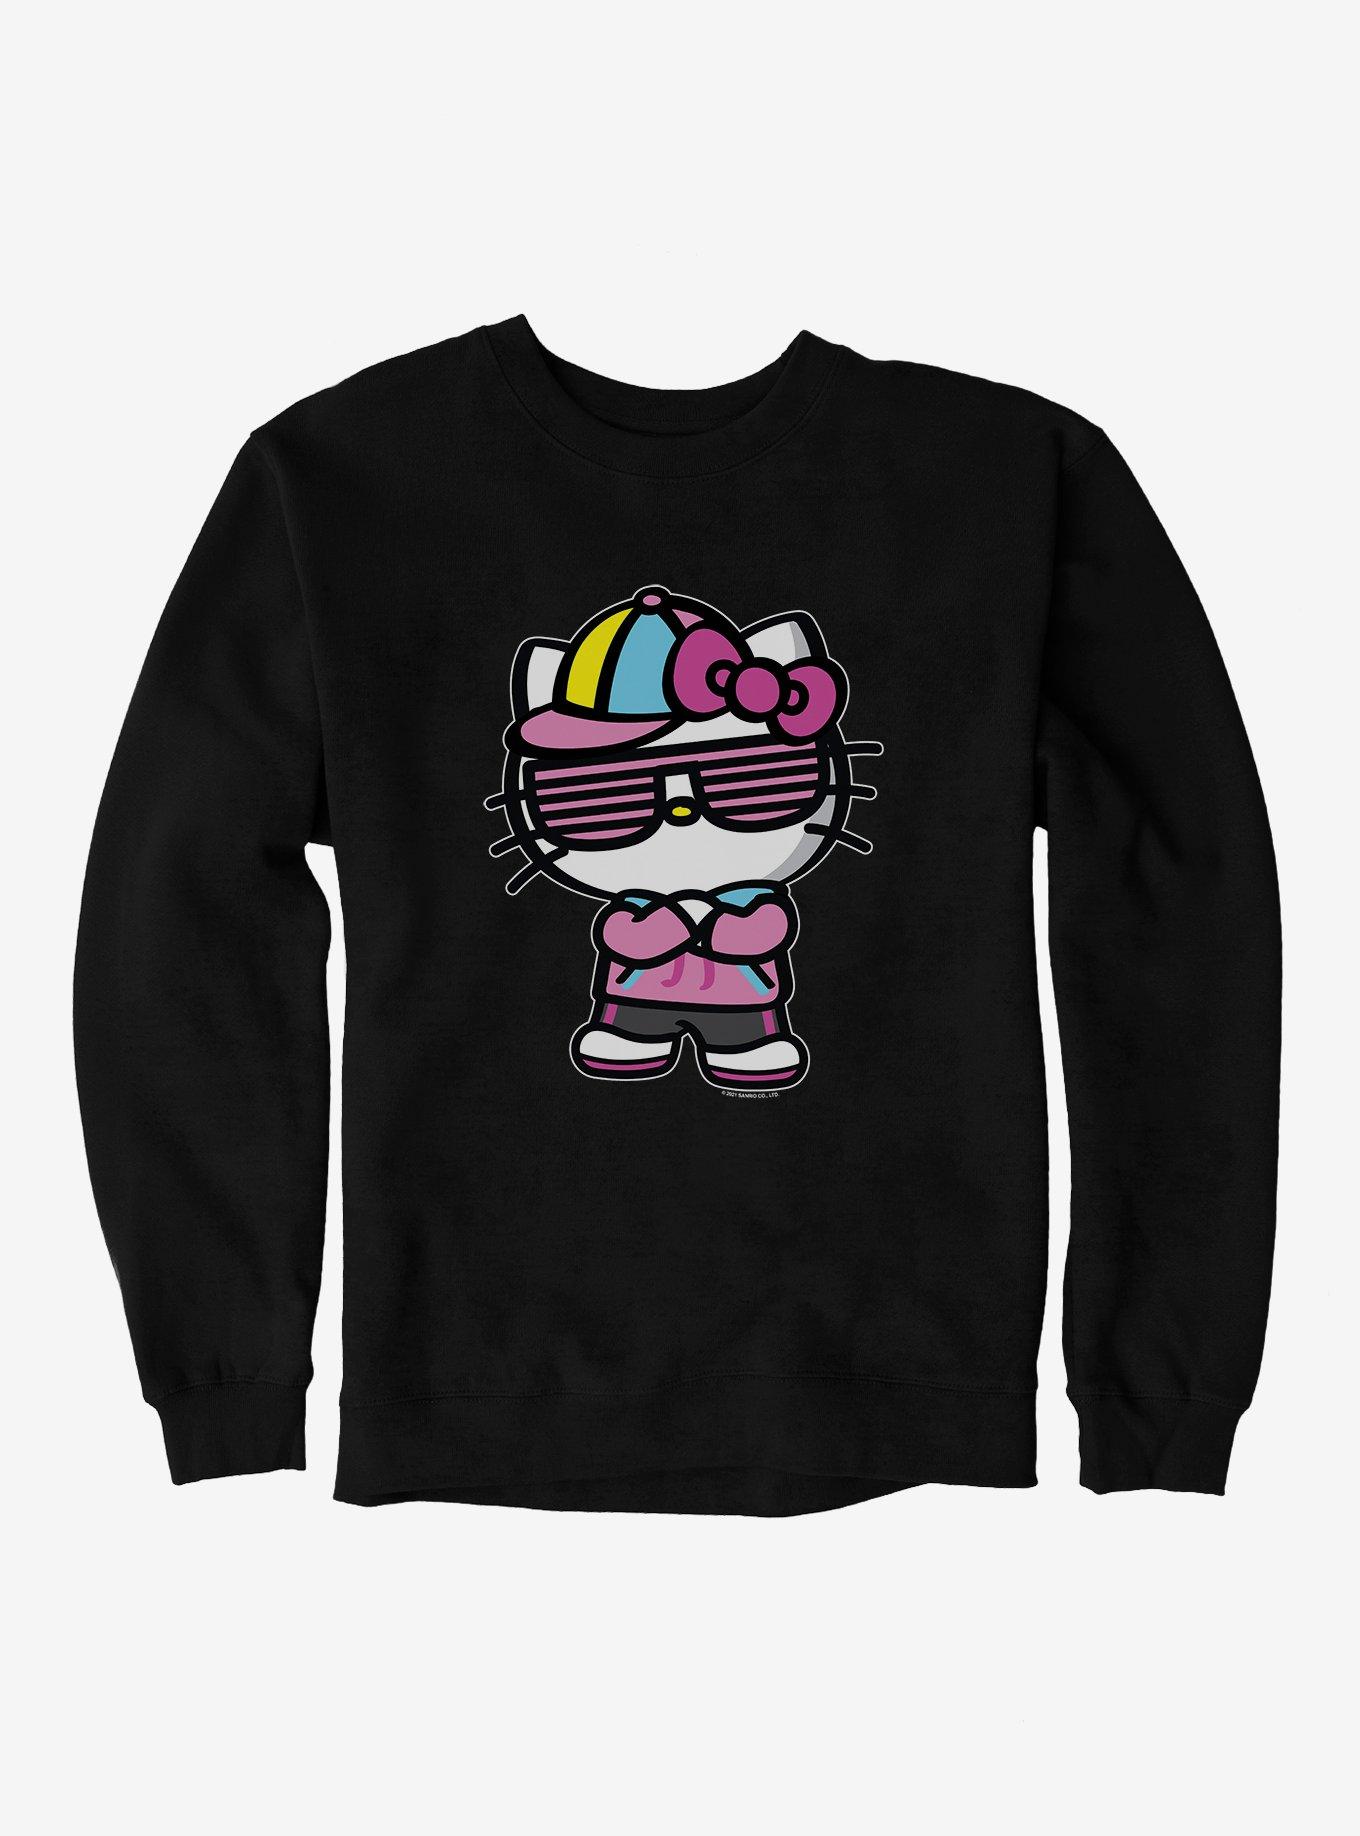 Kitty Baseball Crewneck Sweater or Shirt, Baseball, Sweatshirts, Kawaii,  Crewneck, Gifts, Gifts, Travel Shirt